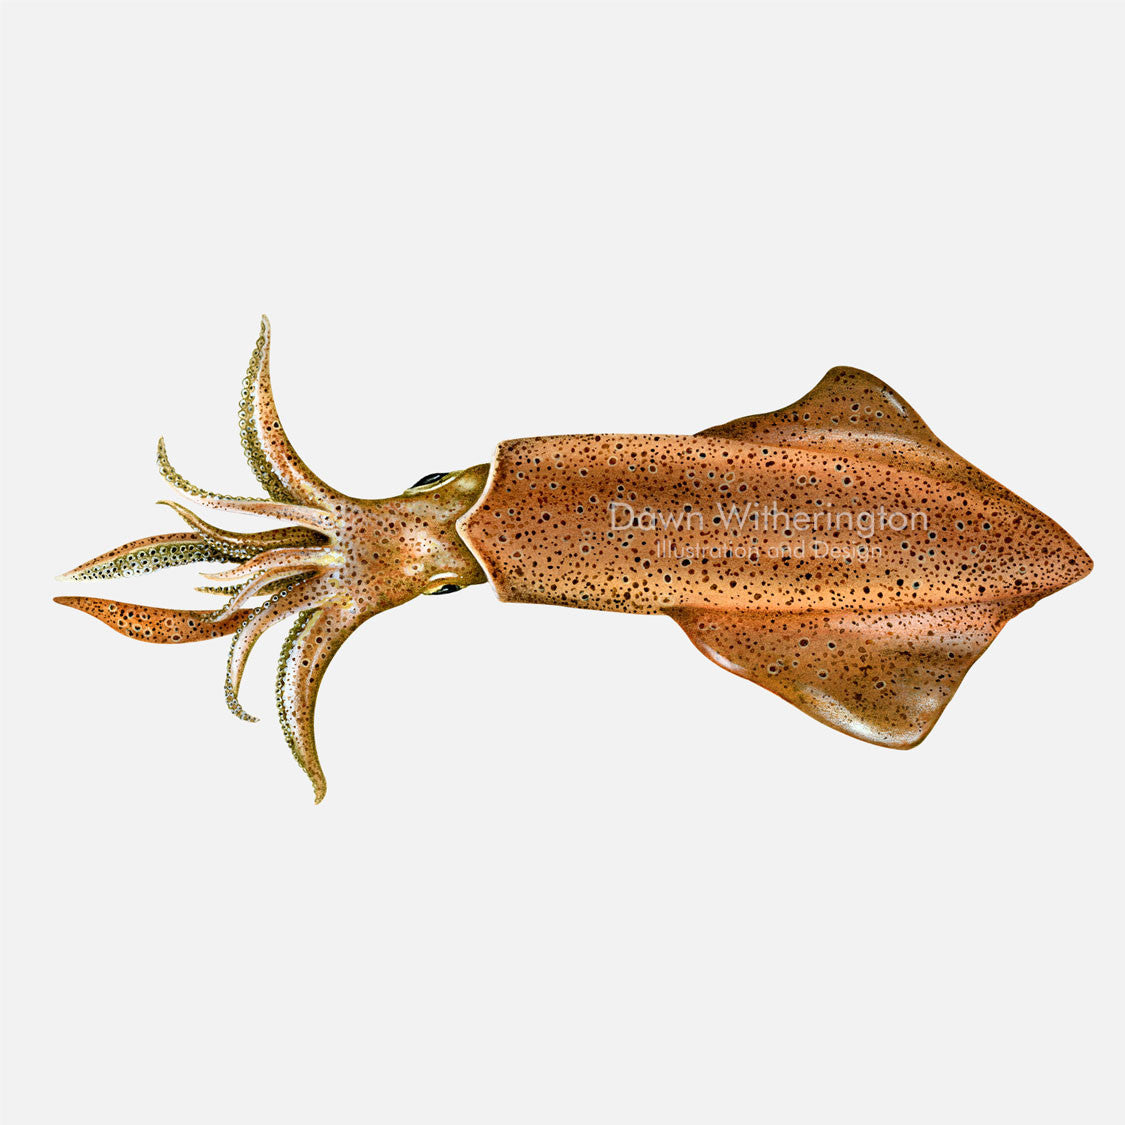 This beautiful drawing of a European squid, Loligo vulgaris, is accurate in detail.